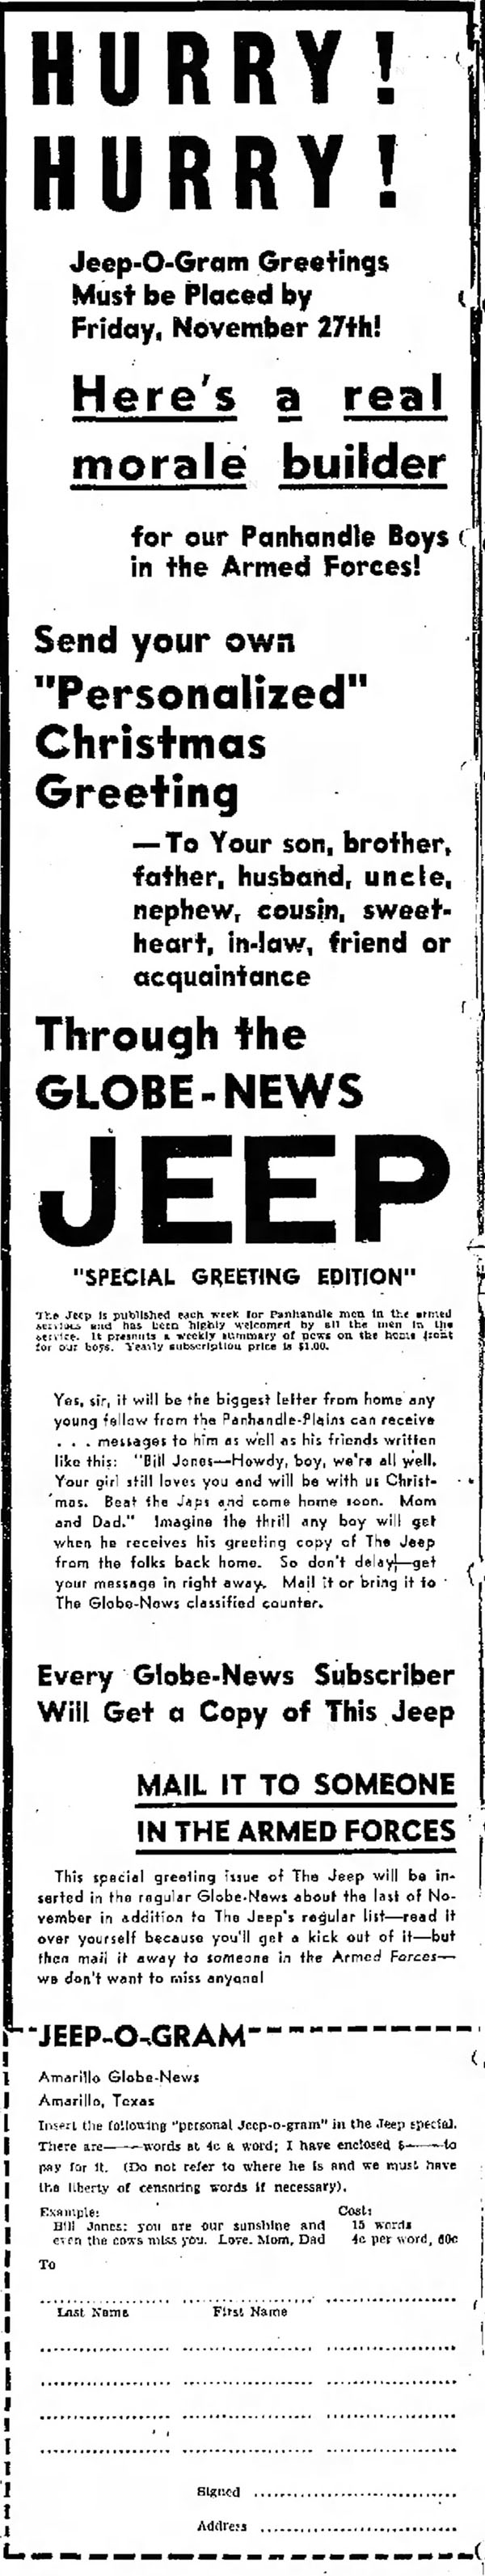 1942-11-17-amarillo-globe-times-jeep-o-gram-entry